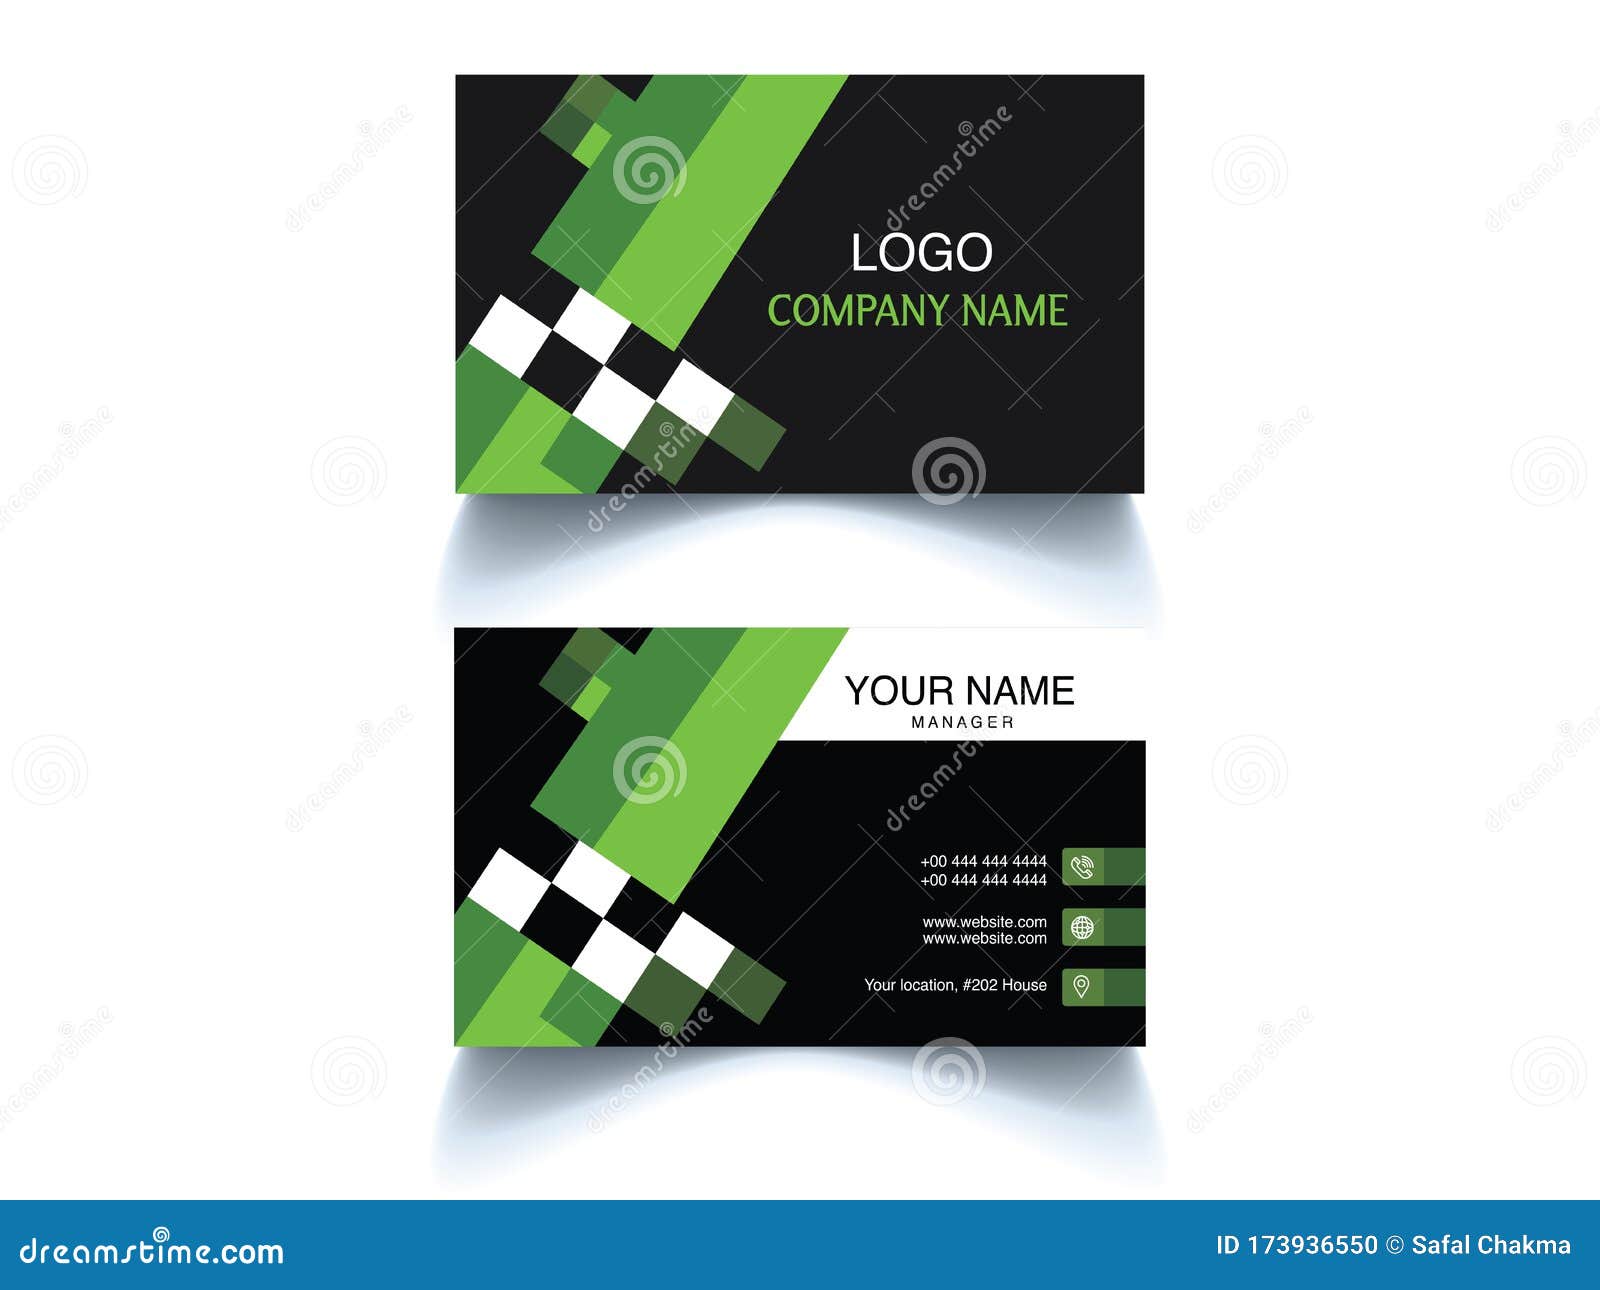 Eye Catching Modern Business Card Design. Stock Vector In Adobe Illustrator Card Template